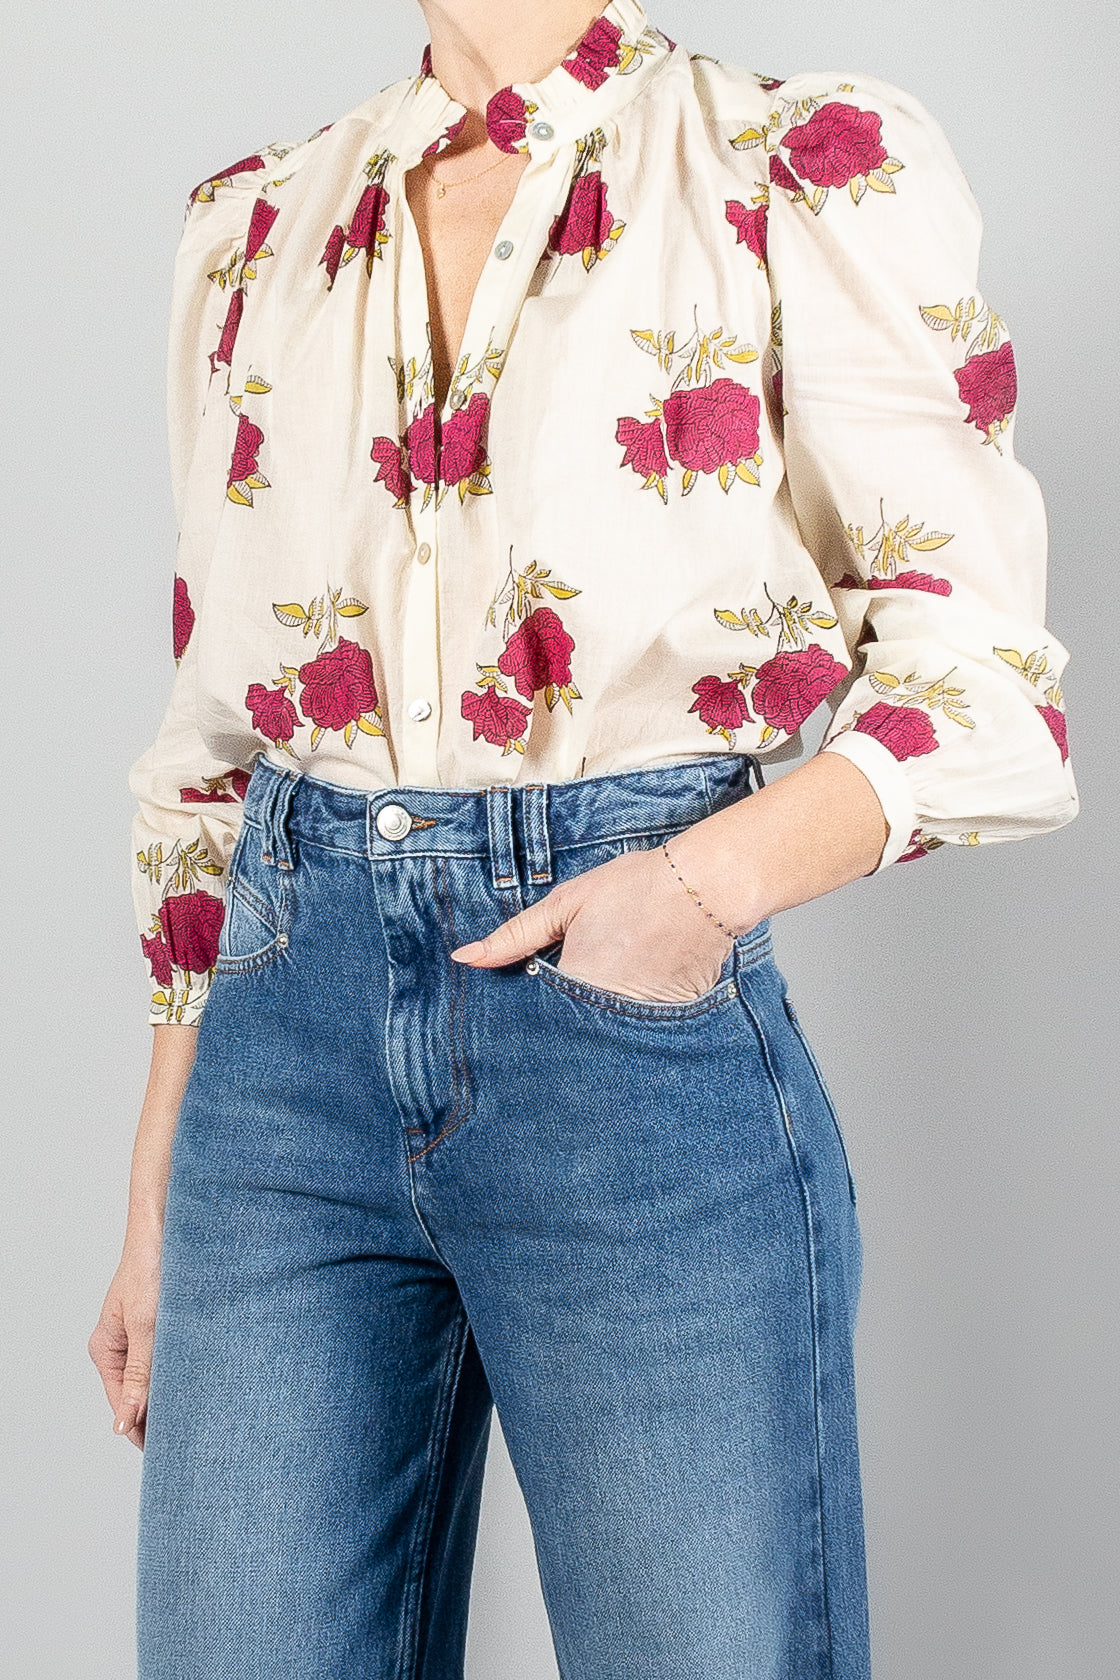 Alix Of Bohemia Annabel Cerise Rosette Shirt-Tops-Misch-Boutique-Vancouver-Canada-misch.ca